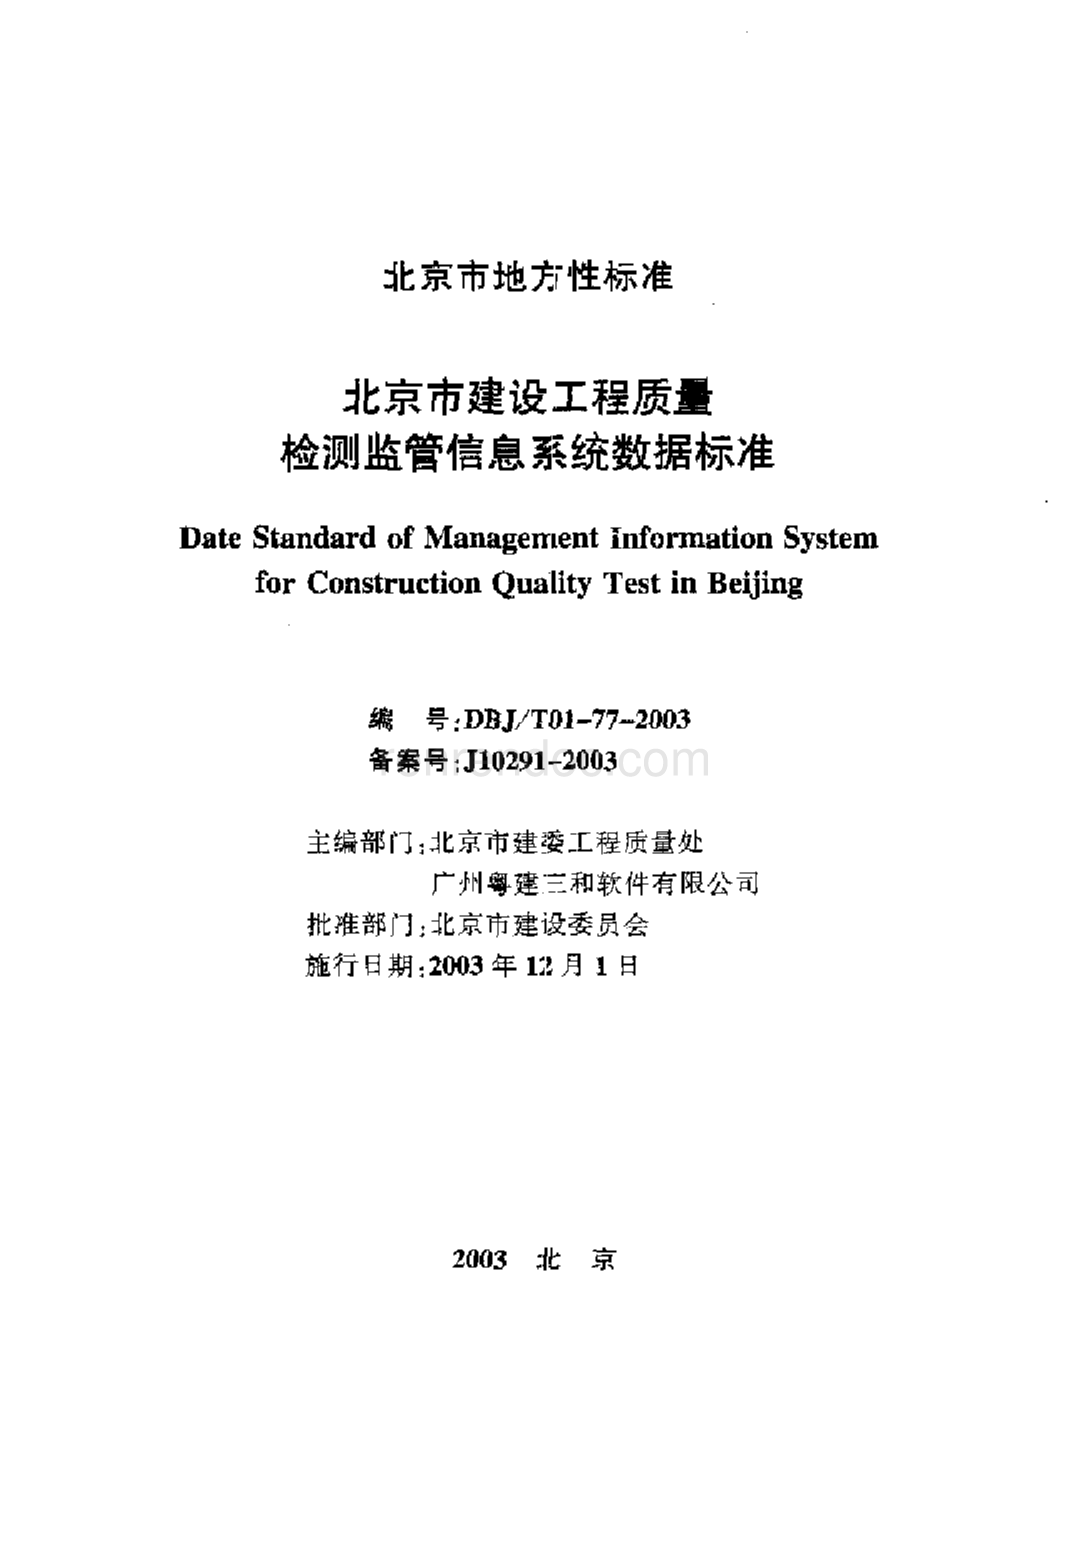 DBJ T 01-77-2003 北京市建设工程质量检测监管信息系统数据标准